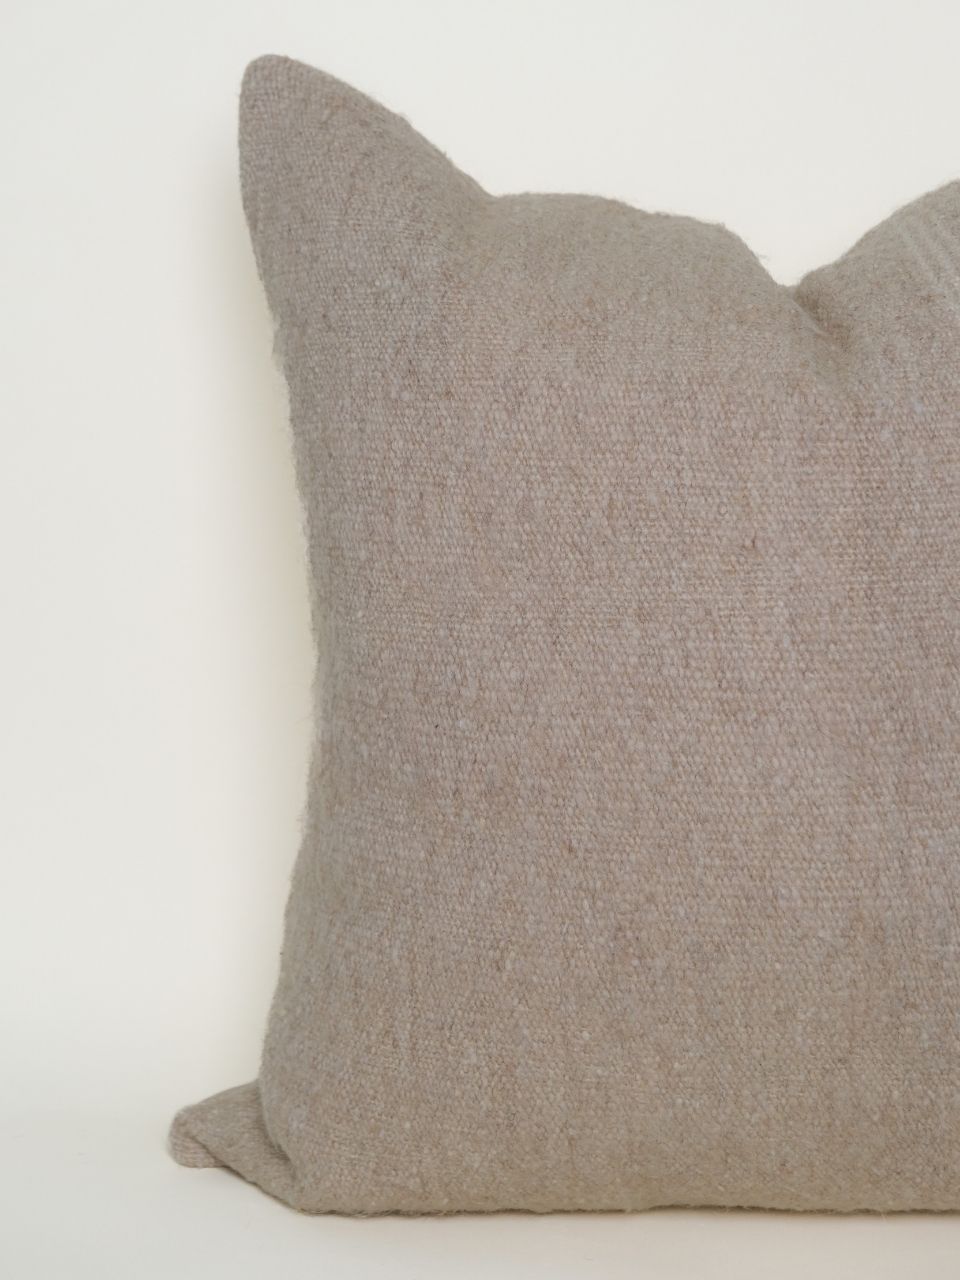 Alpaca Kilim Pillow No.2